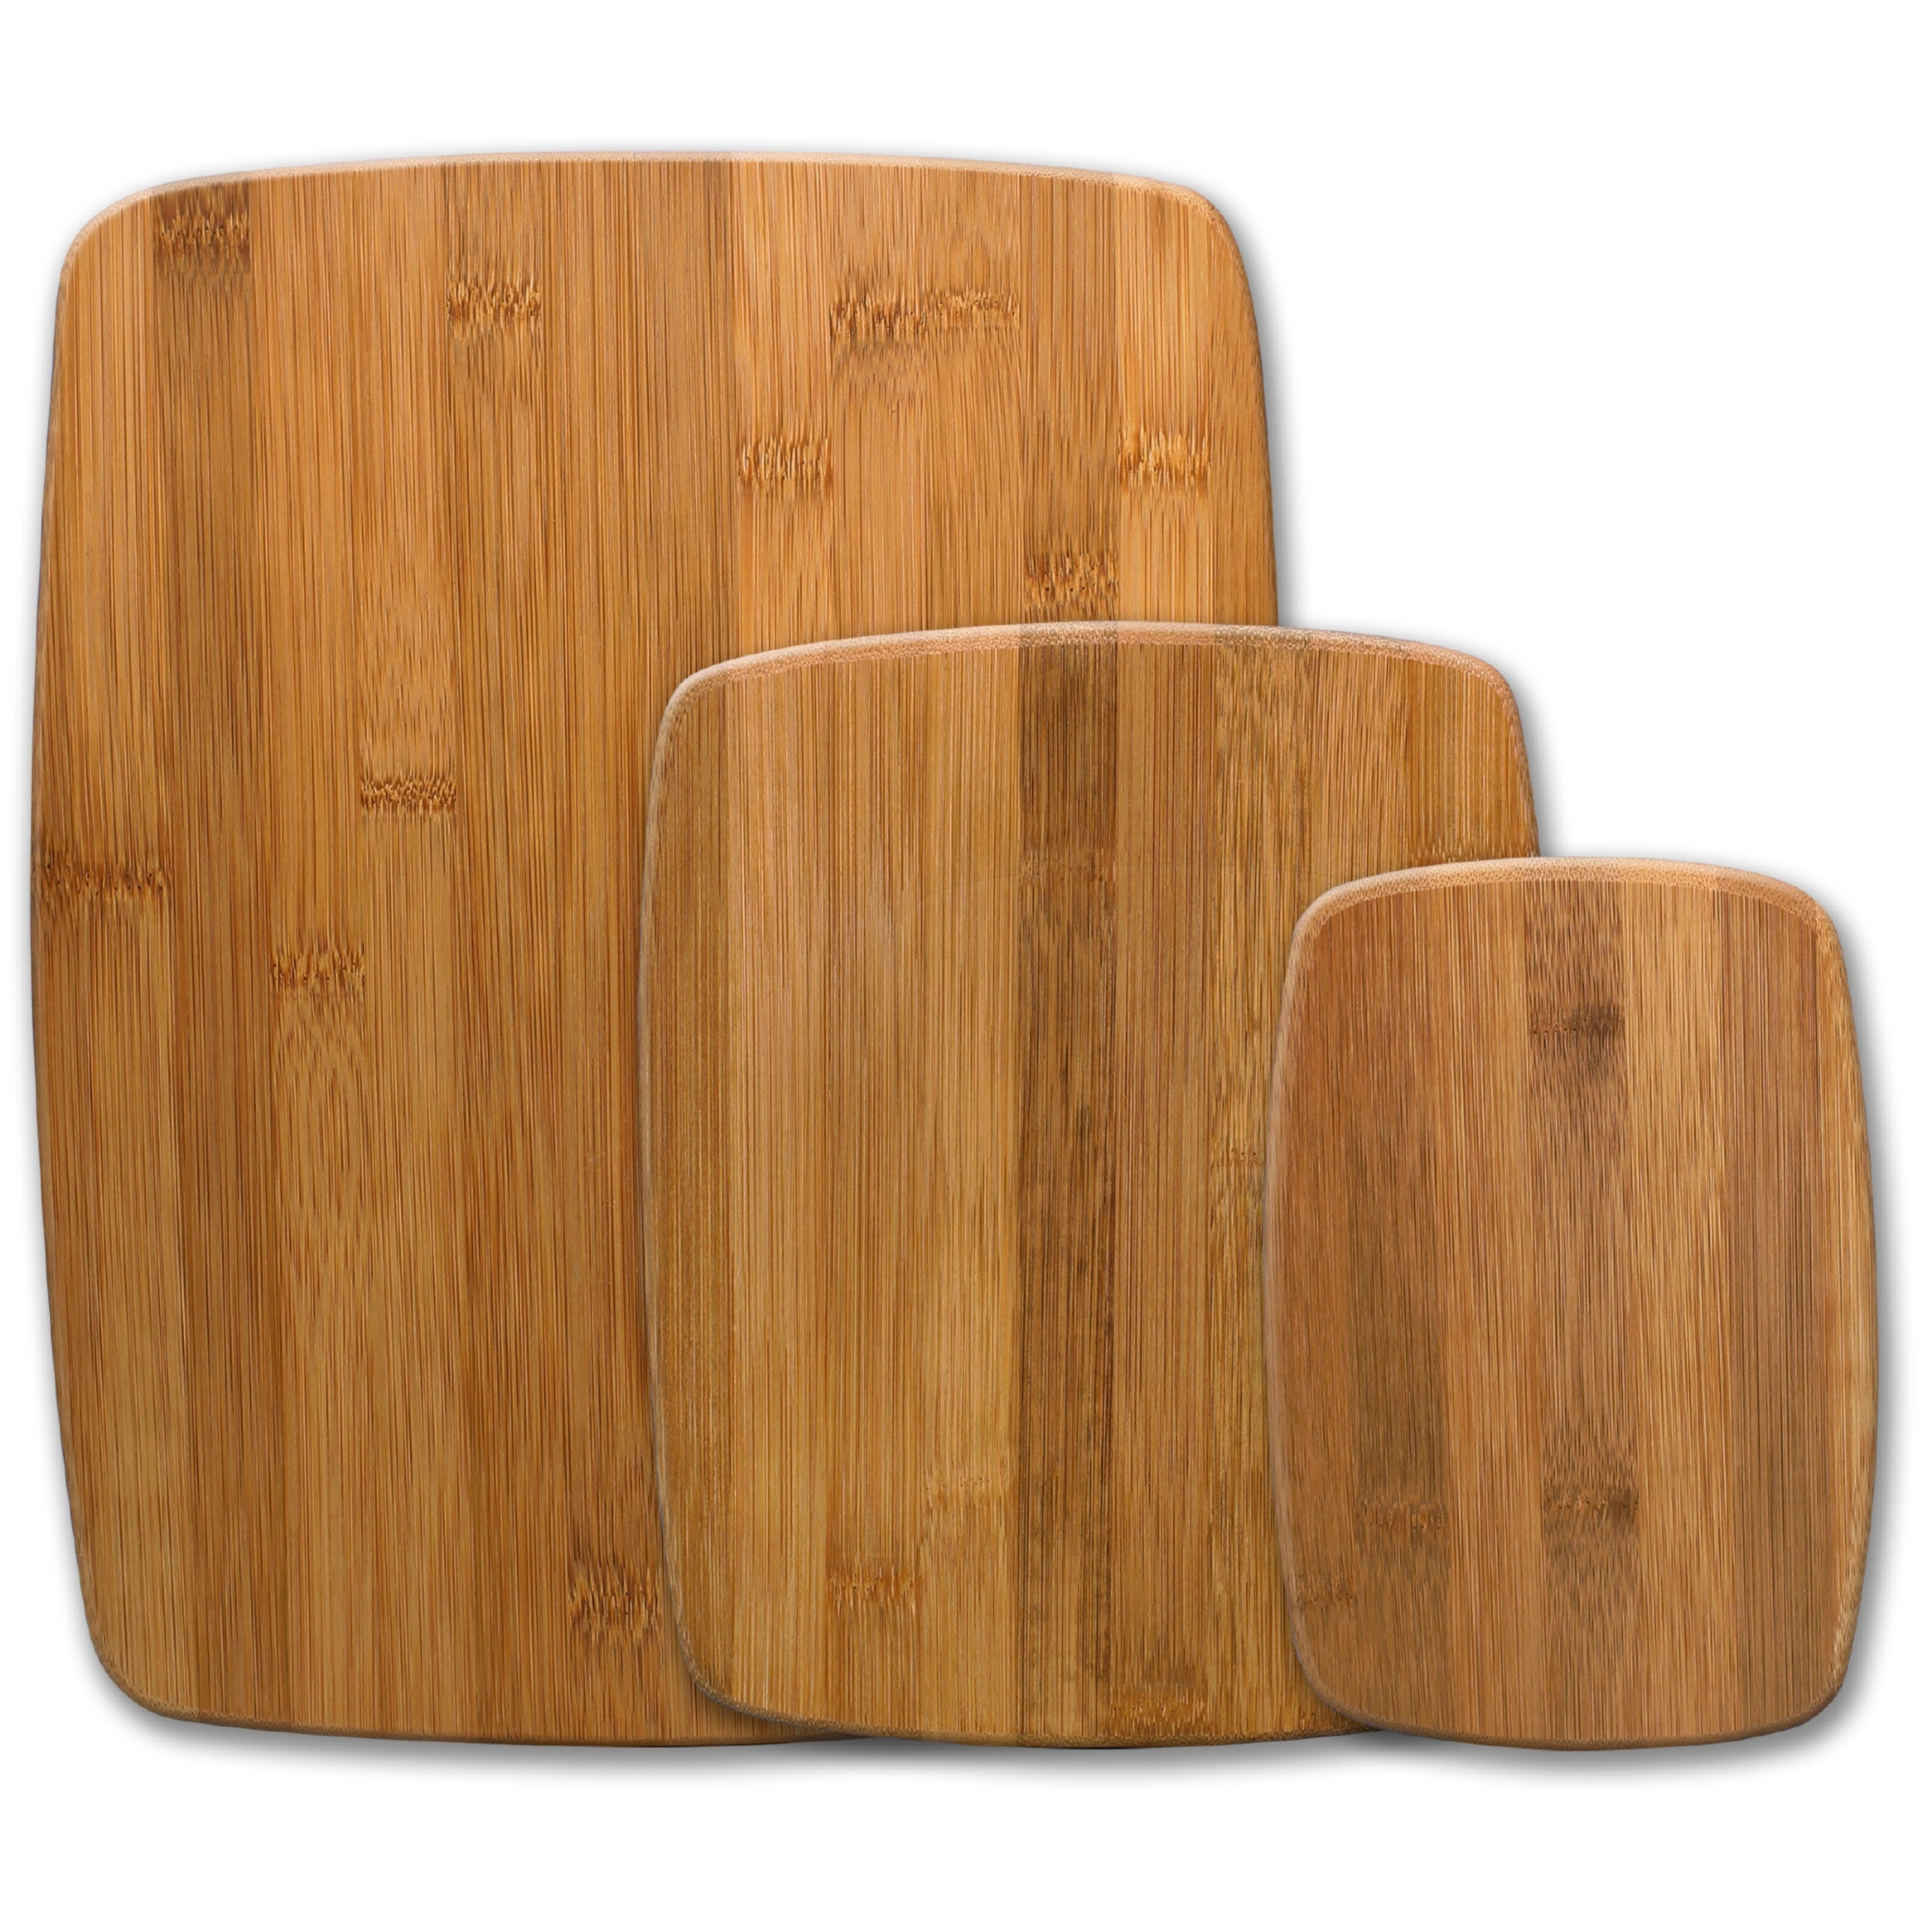 Farberware 3-Piece Kitchen Cutting Board Set Bamboo Wood - image 1 of 17